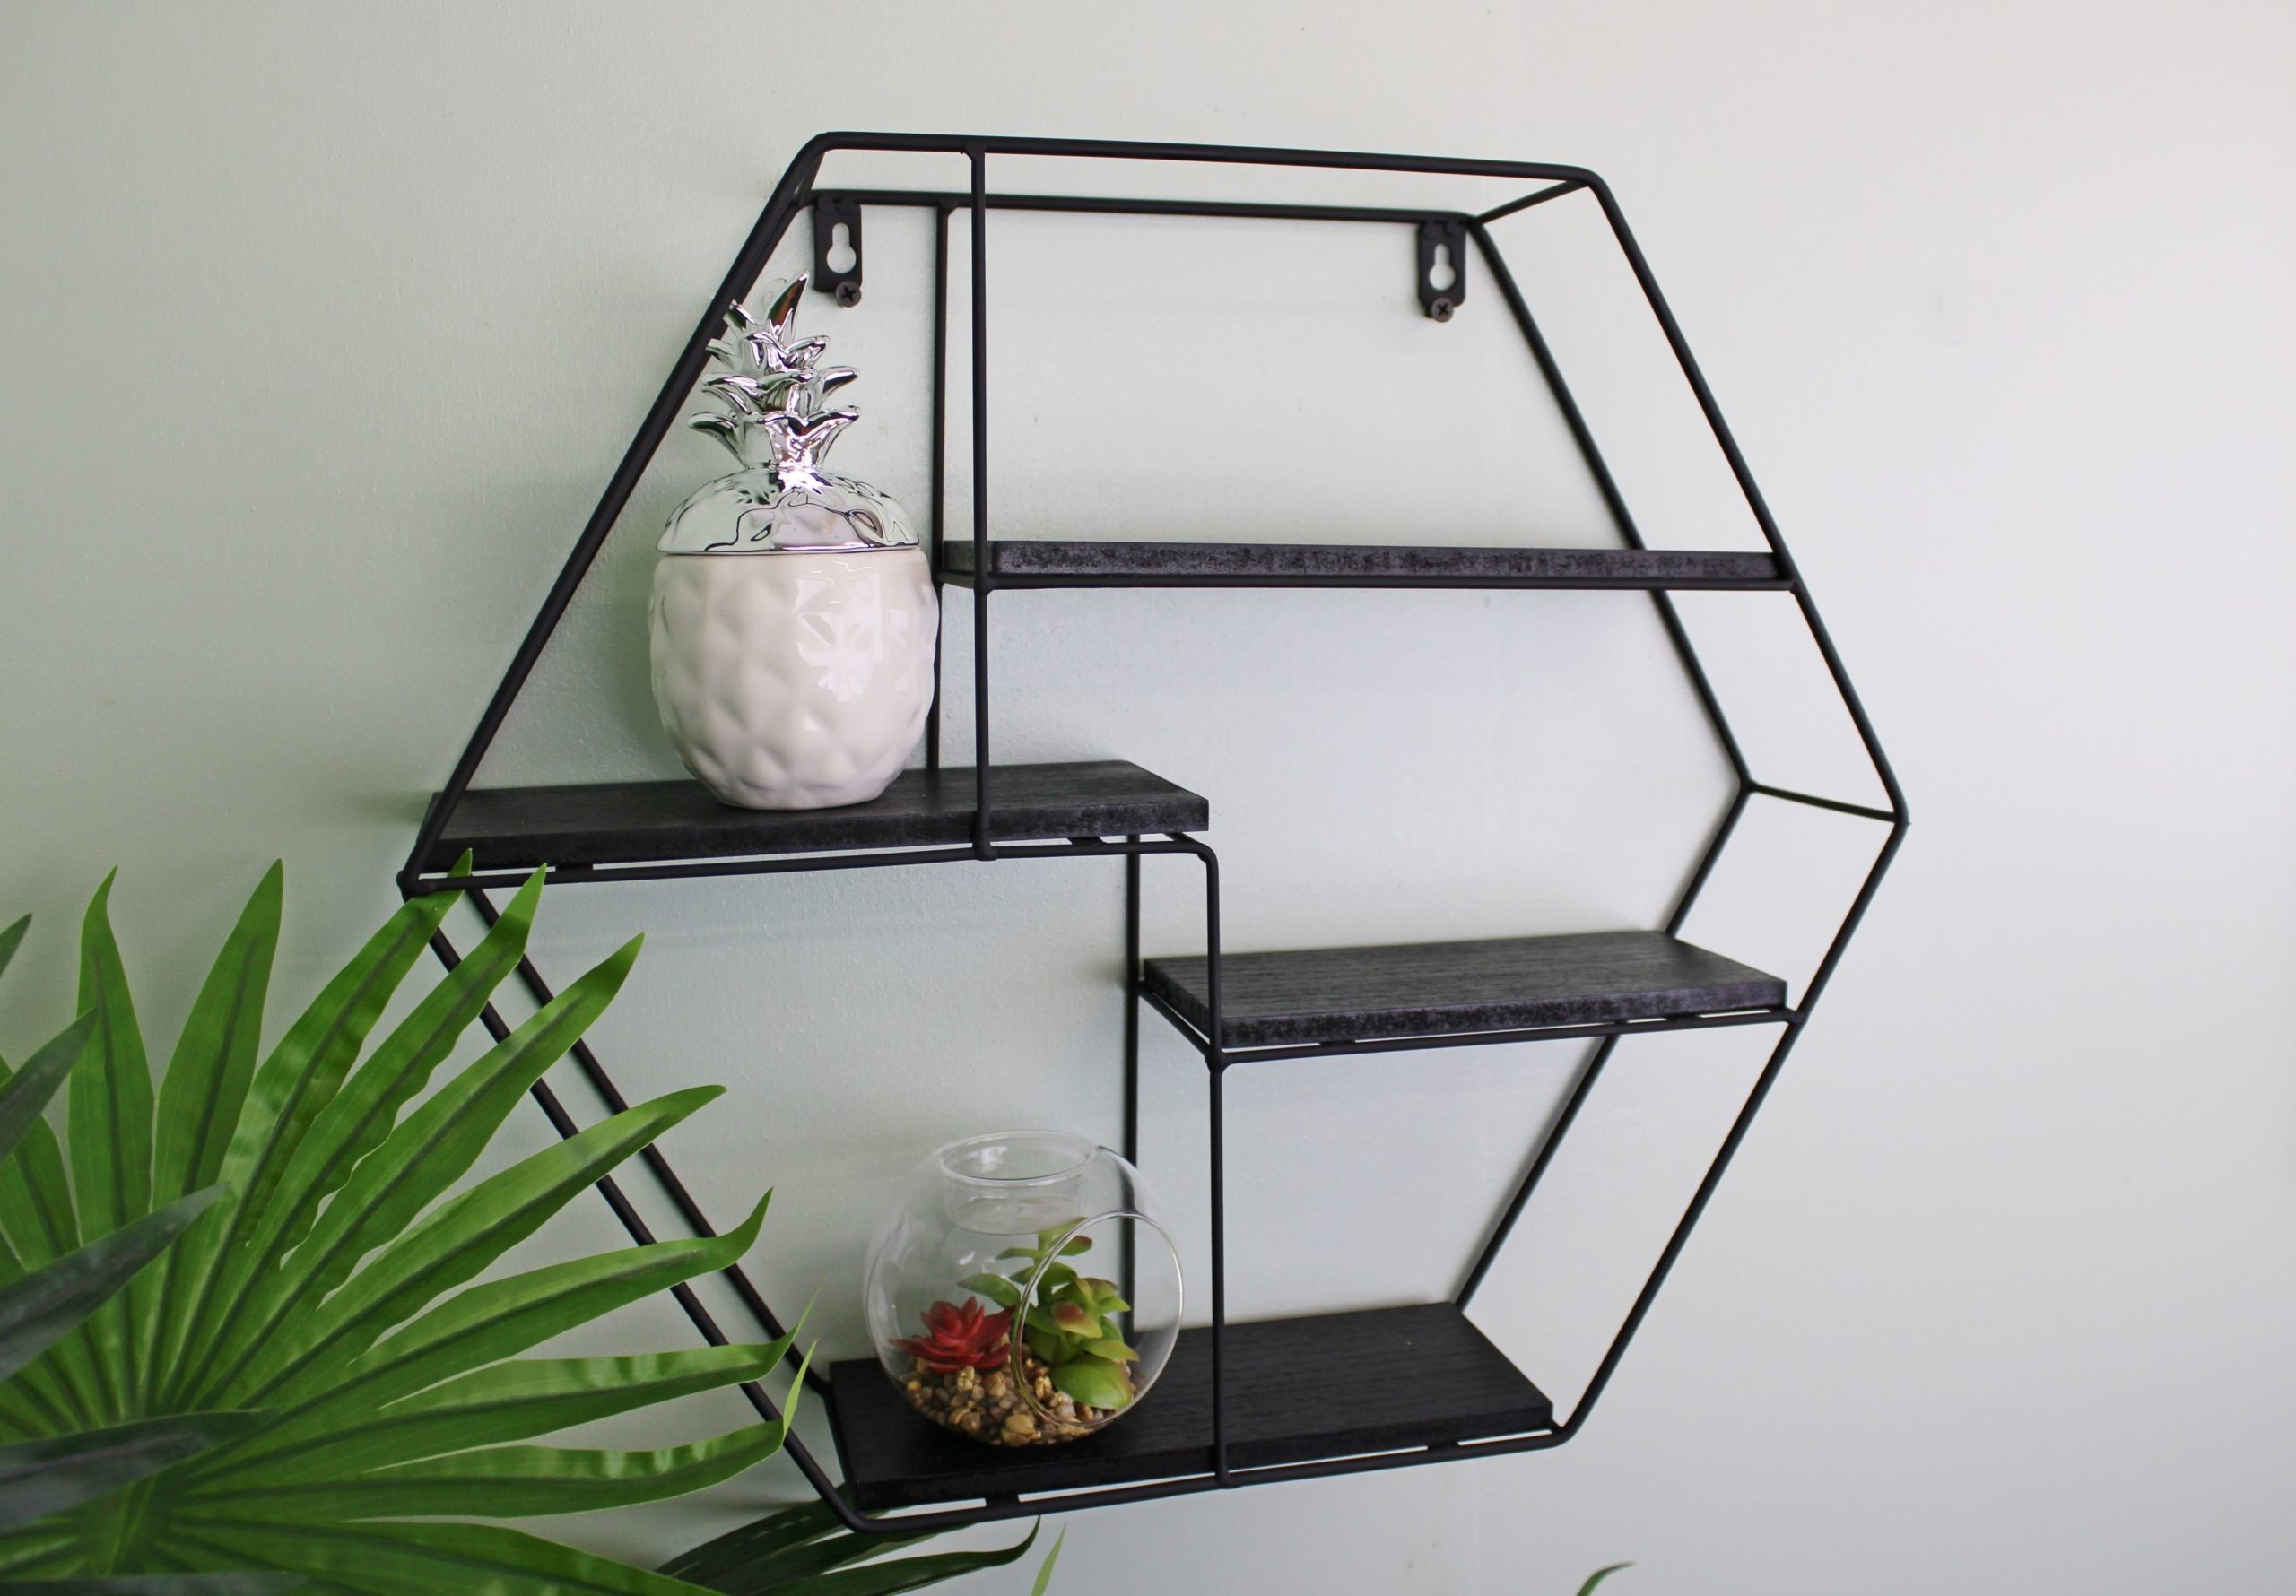 Hexagonal Wall Shelf in Black Metal with 4 Shelves